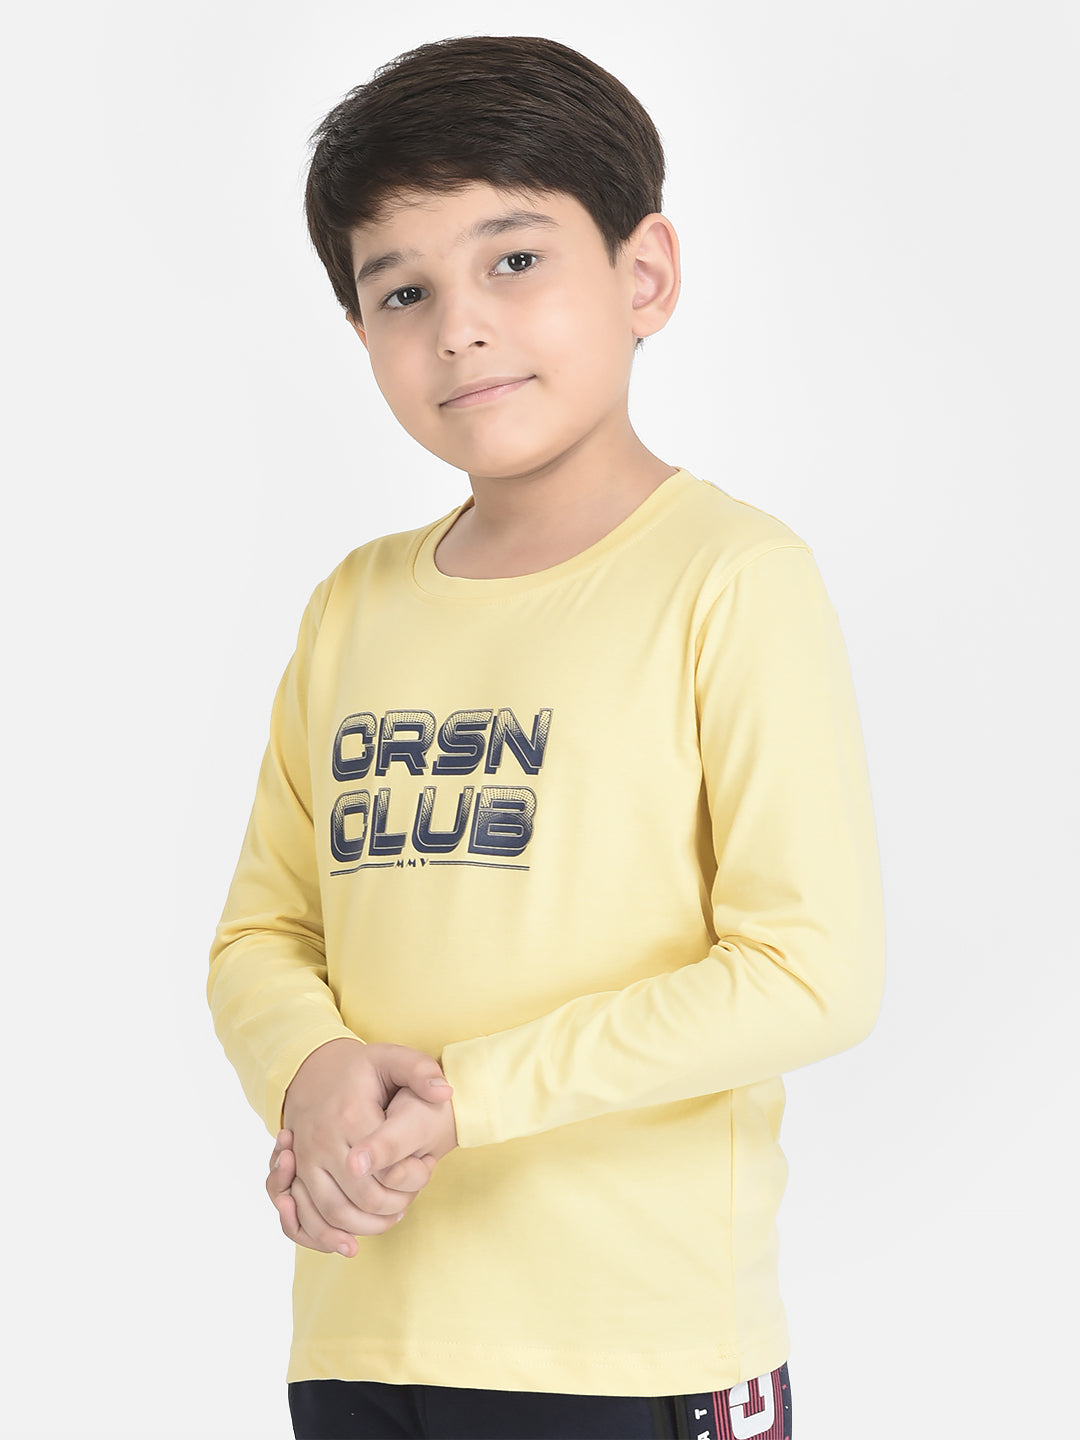 Yellow Long-Sleeved Typographic T-Shirt-Boys T-Shirts-Crimsoune Club